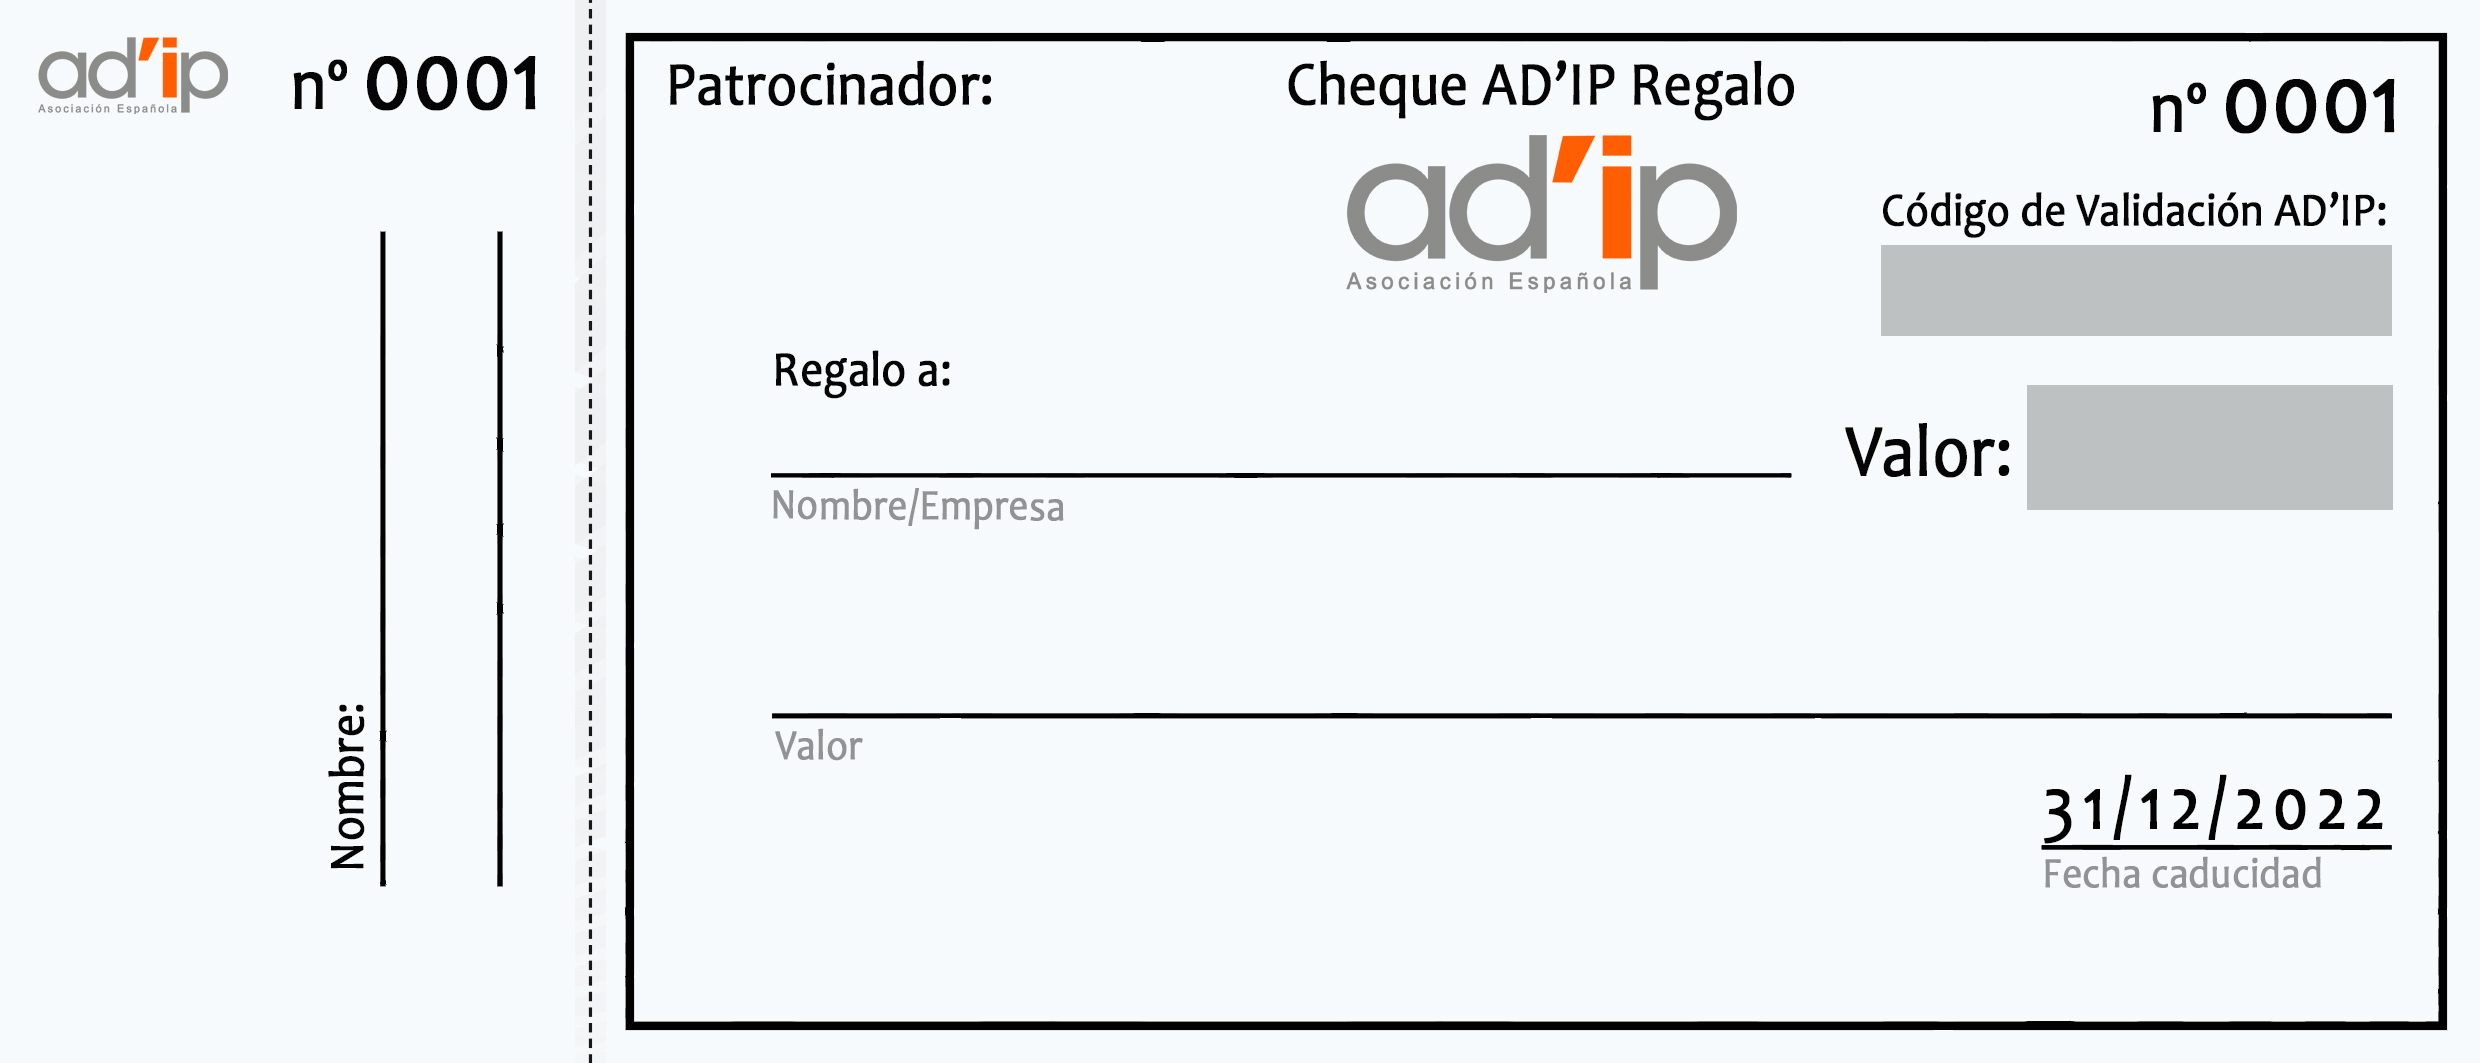 CHEQUE-AD'IP-REGALO